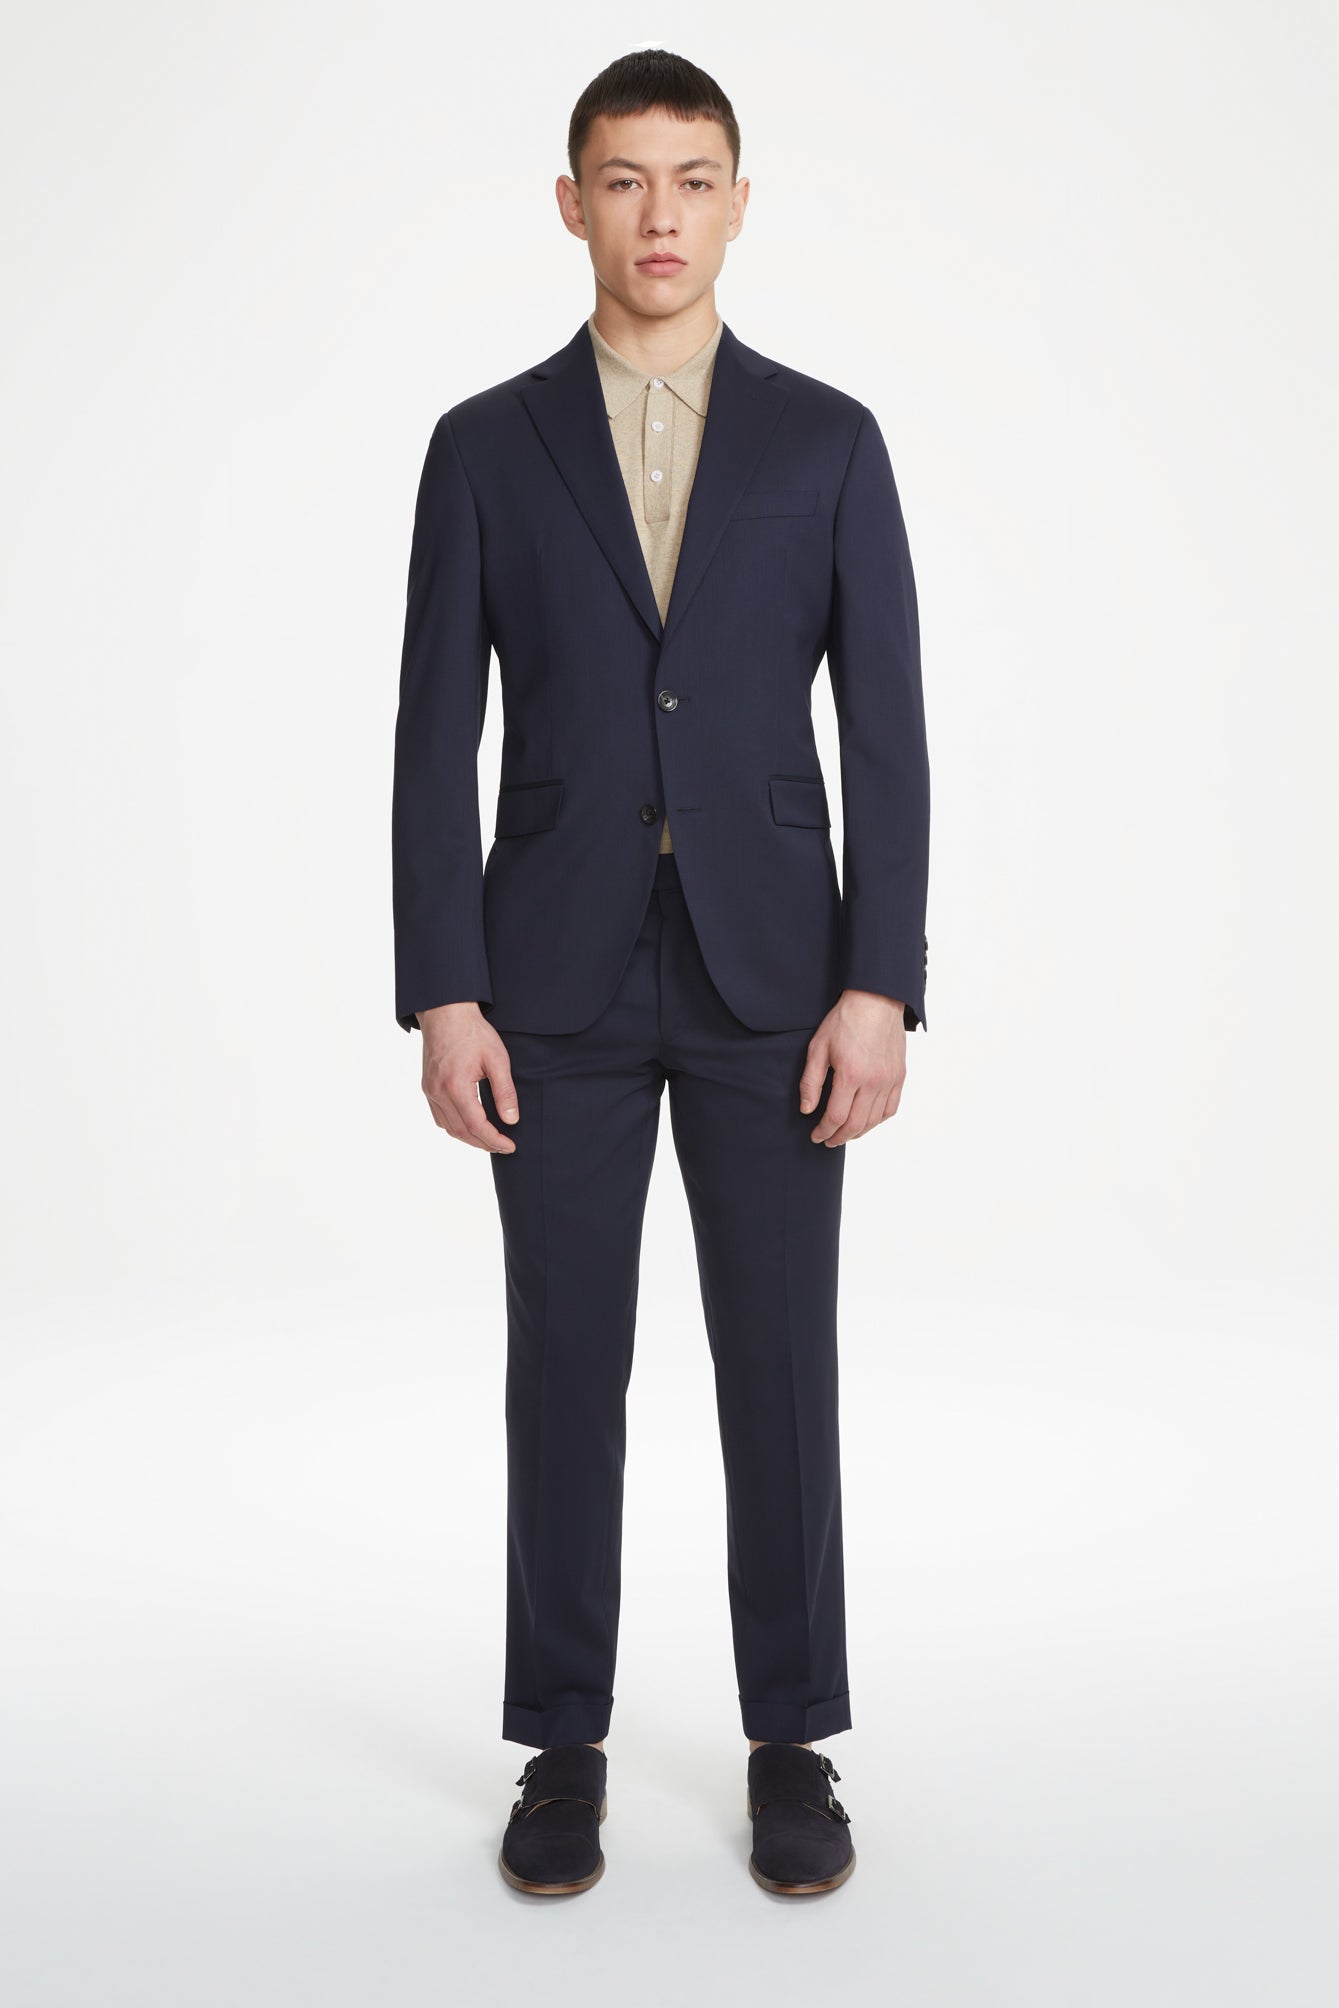 Jack Victor Men's Navy Solid Esprit Wool Suit Separate Jacket